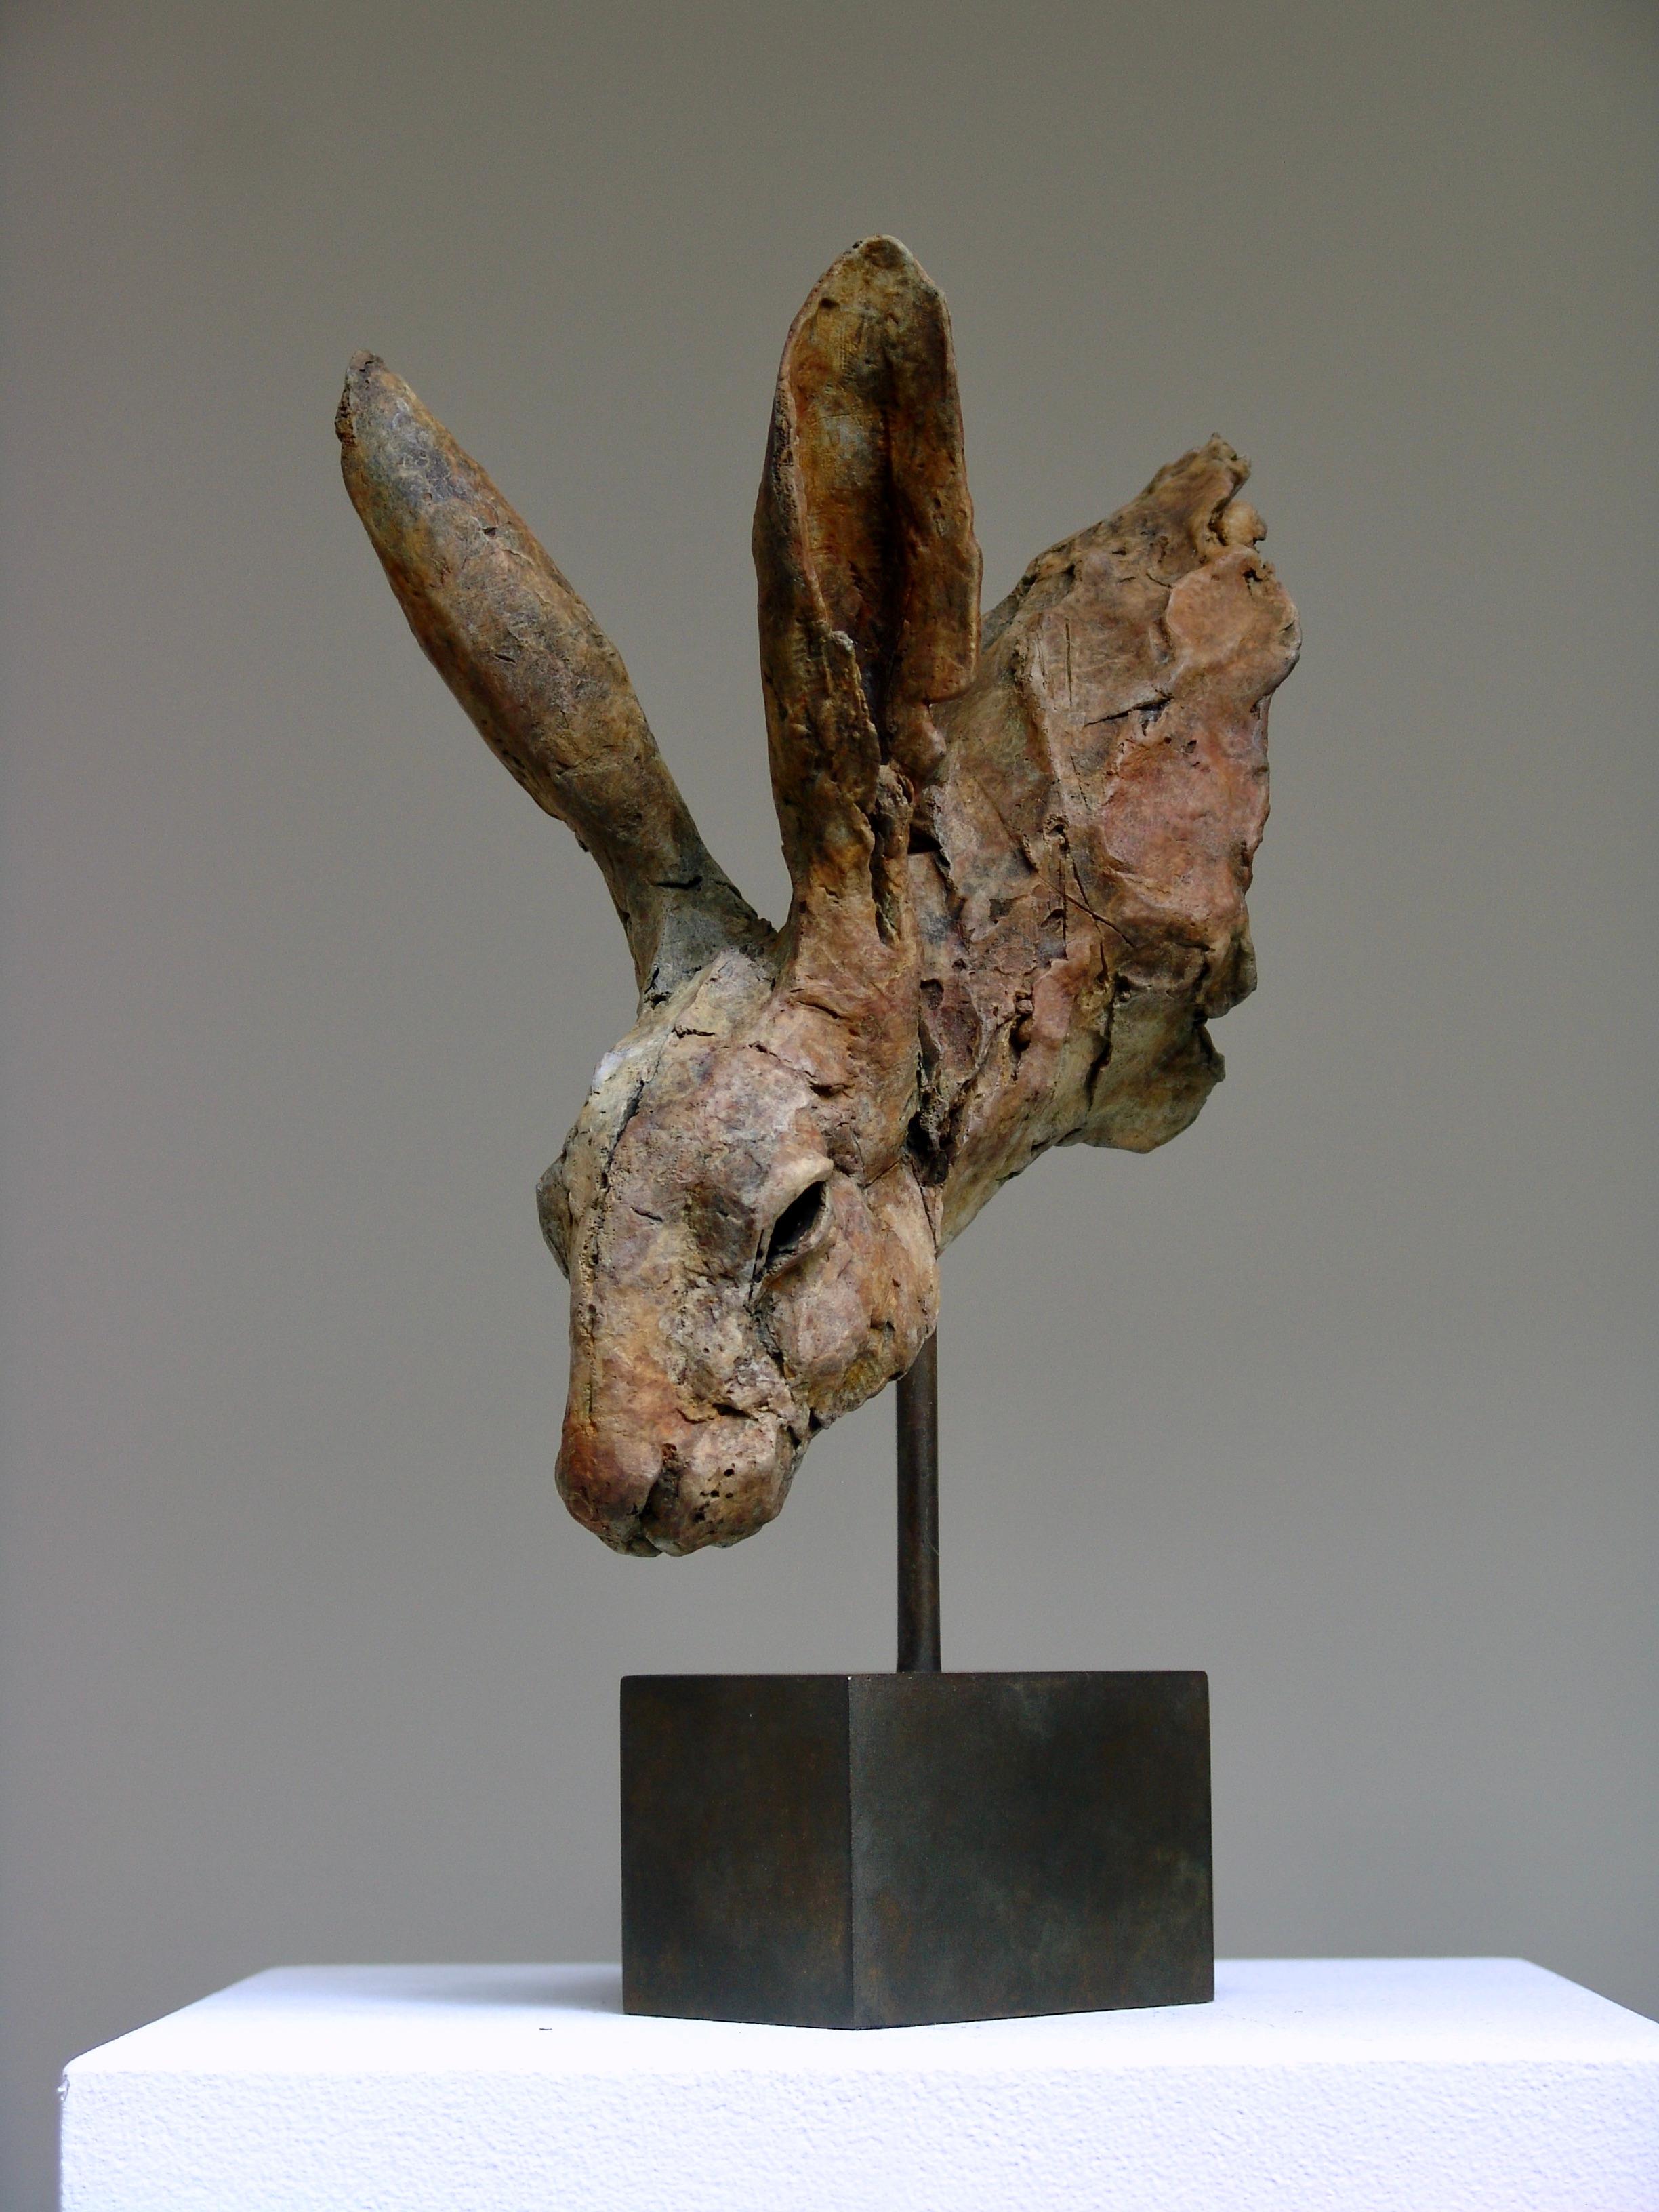 Nichola Theakston Figurative Sculpture - "Hare Head Study 3" Contemporary Bronze Sculpture of a Hare